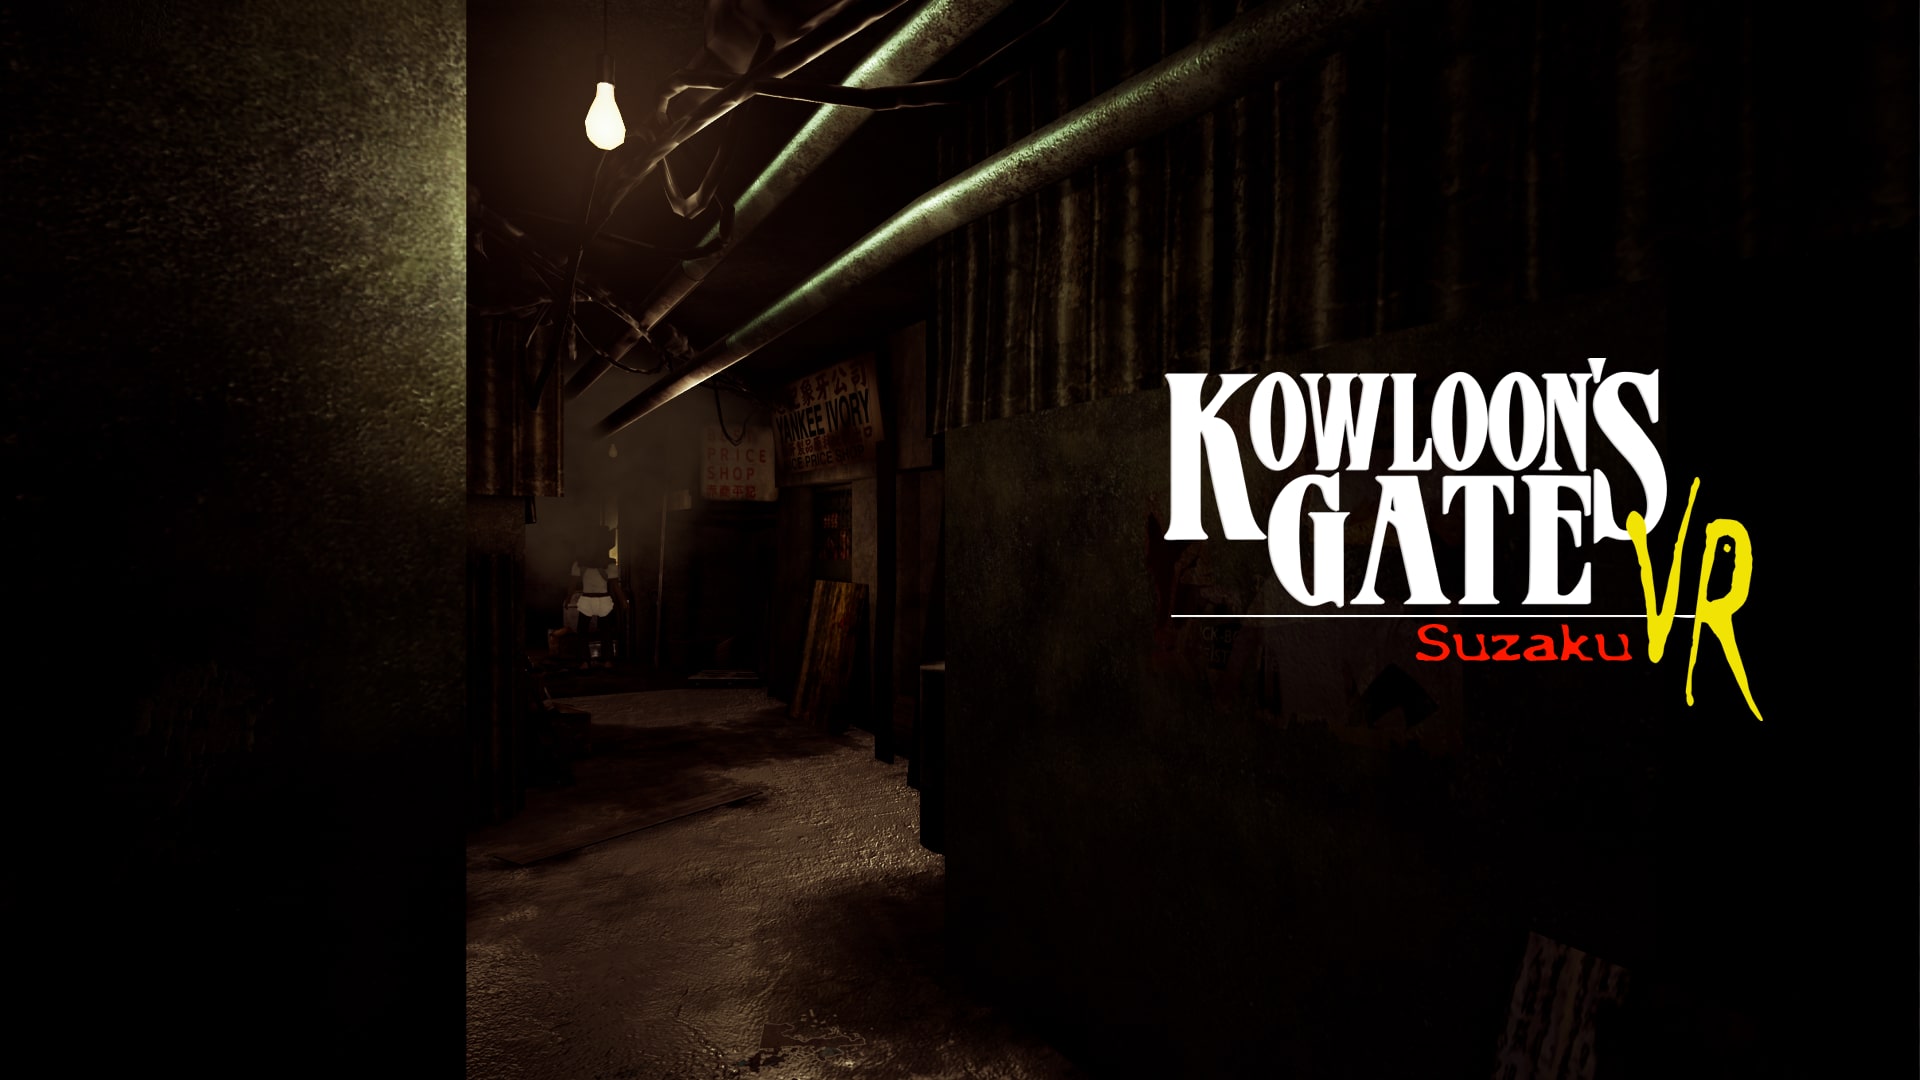 Kowloon's Gate VR suzaku Happy Hour Set (English/Chinese/Japanese Ver.)